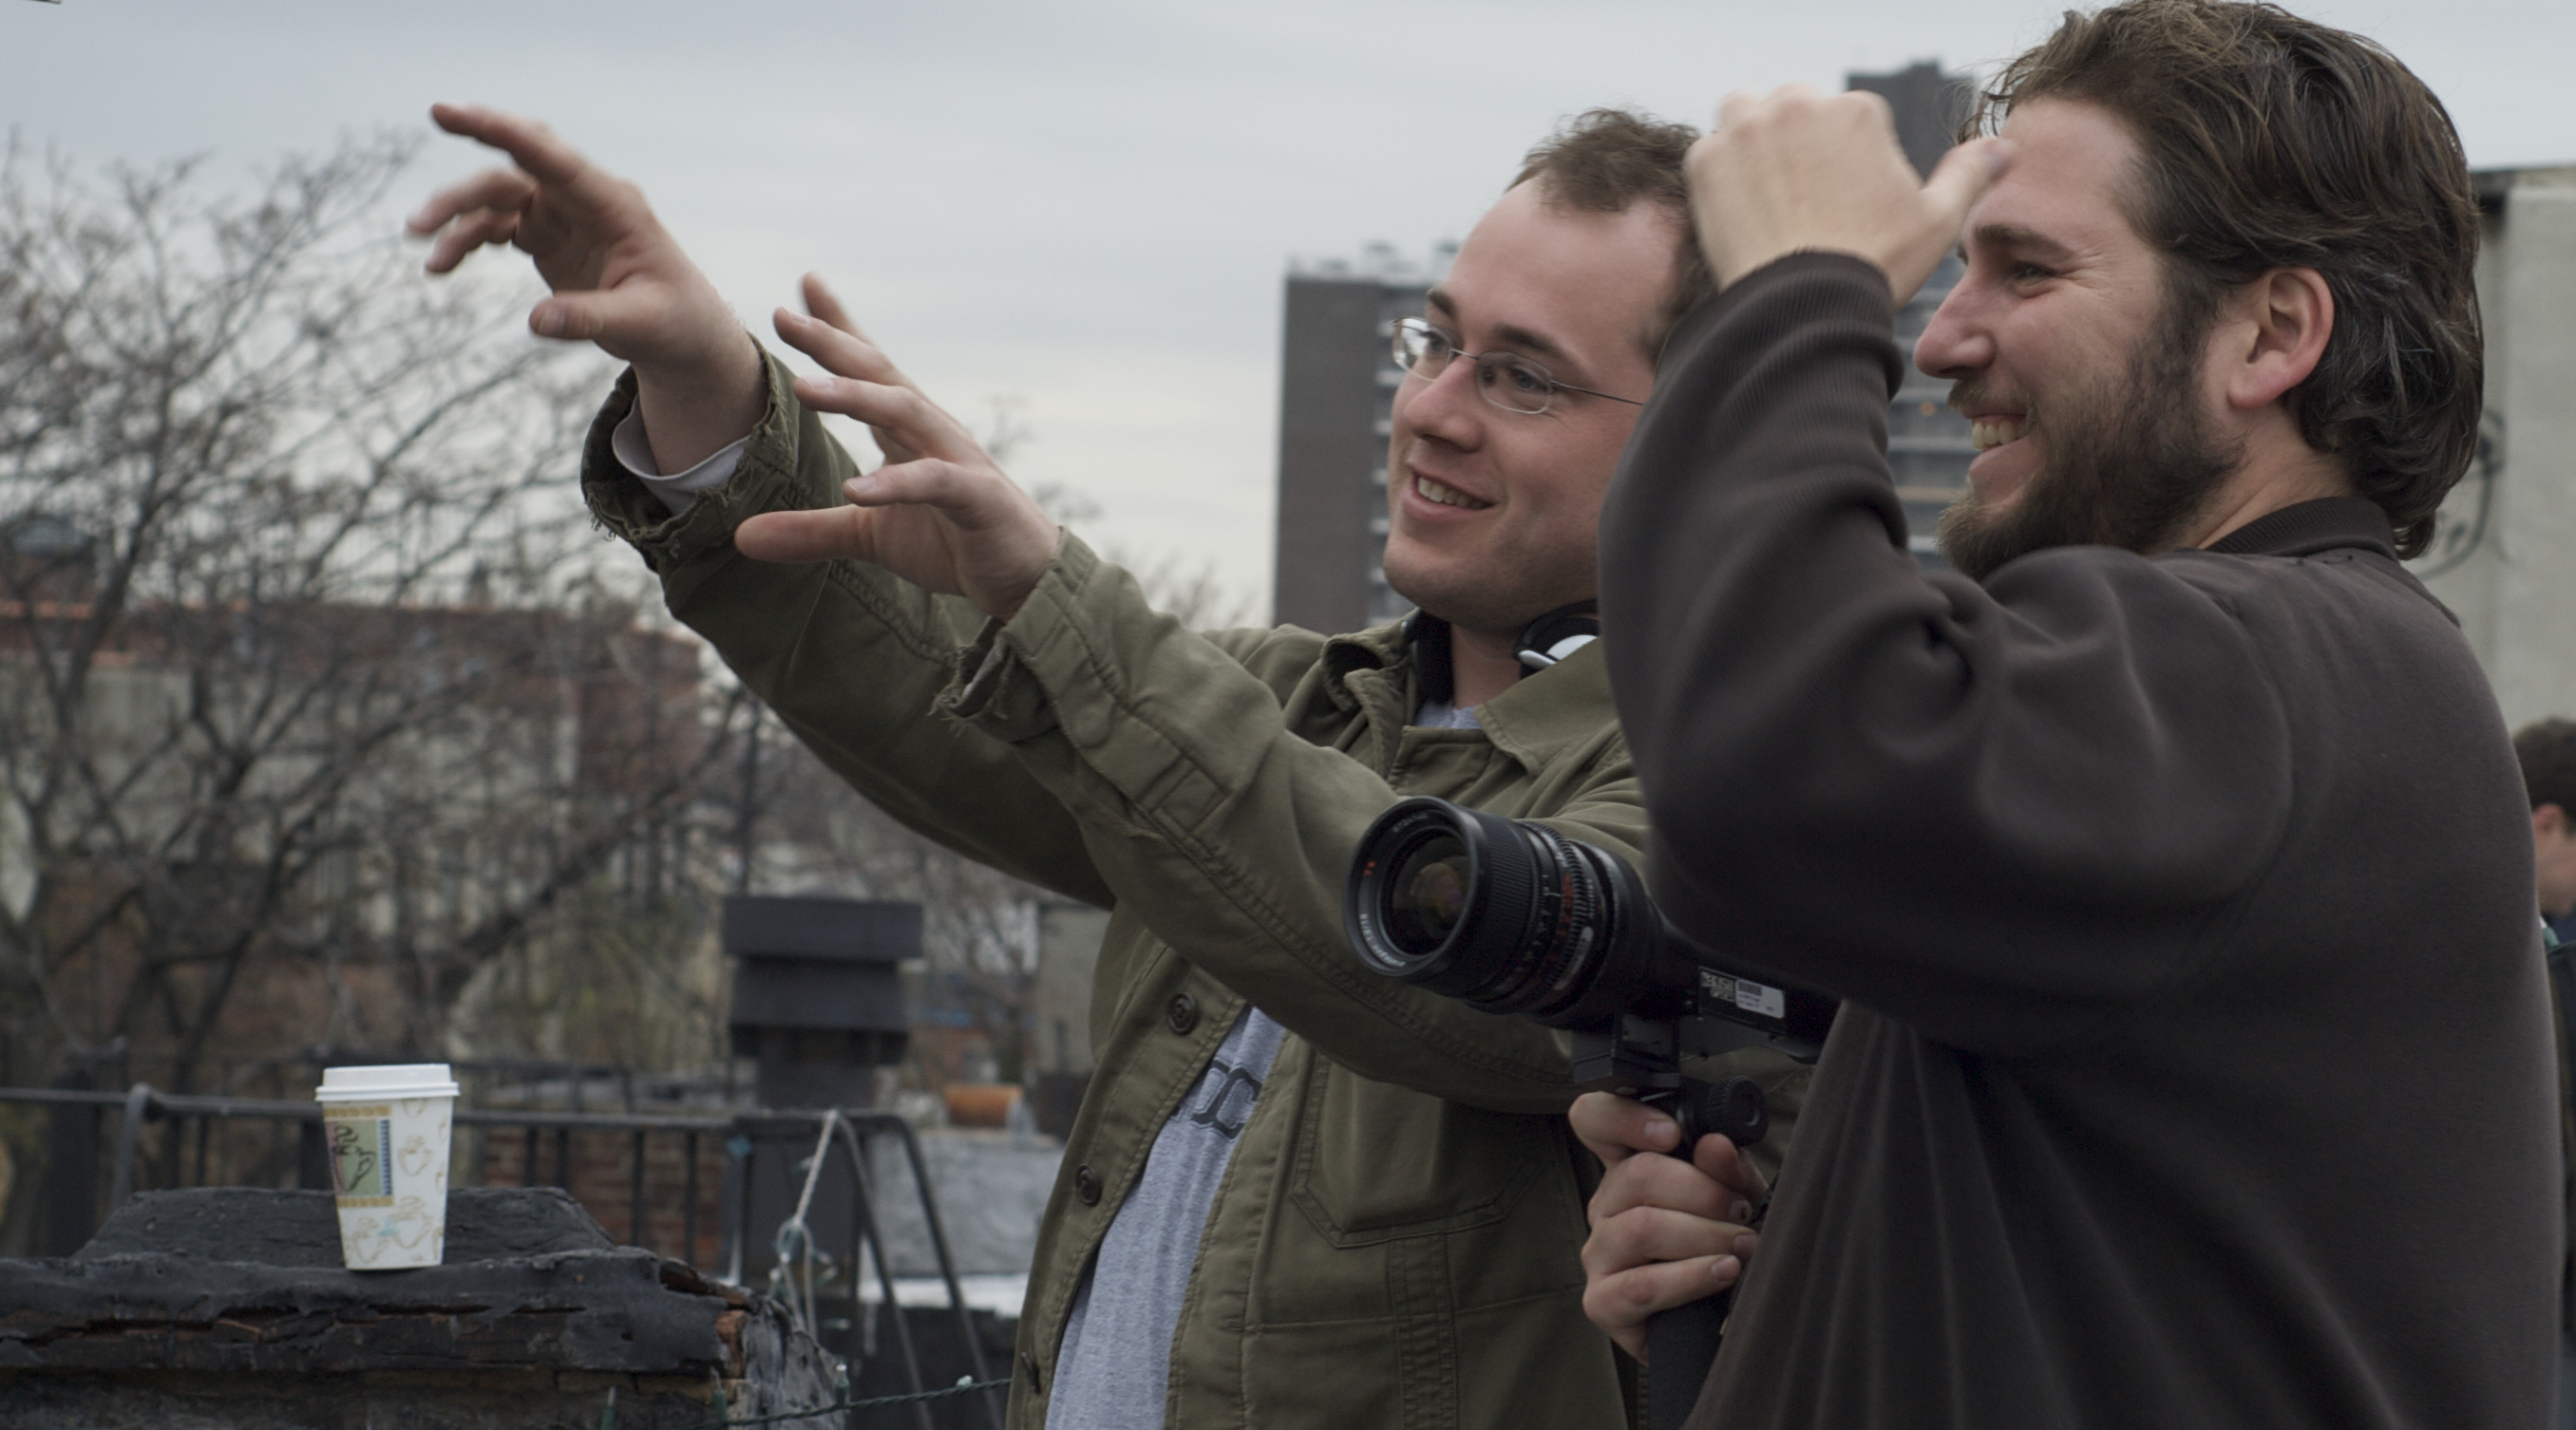 Chris Chambers (R) on location with Director, Joe Leonard (L), in New York City.